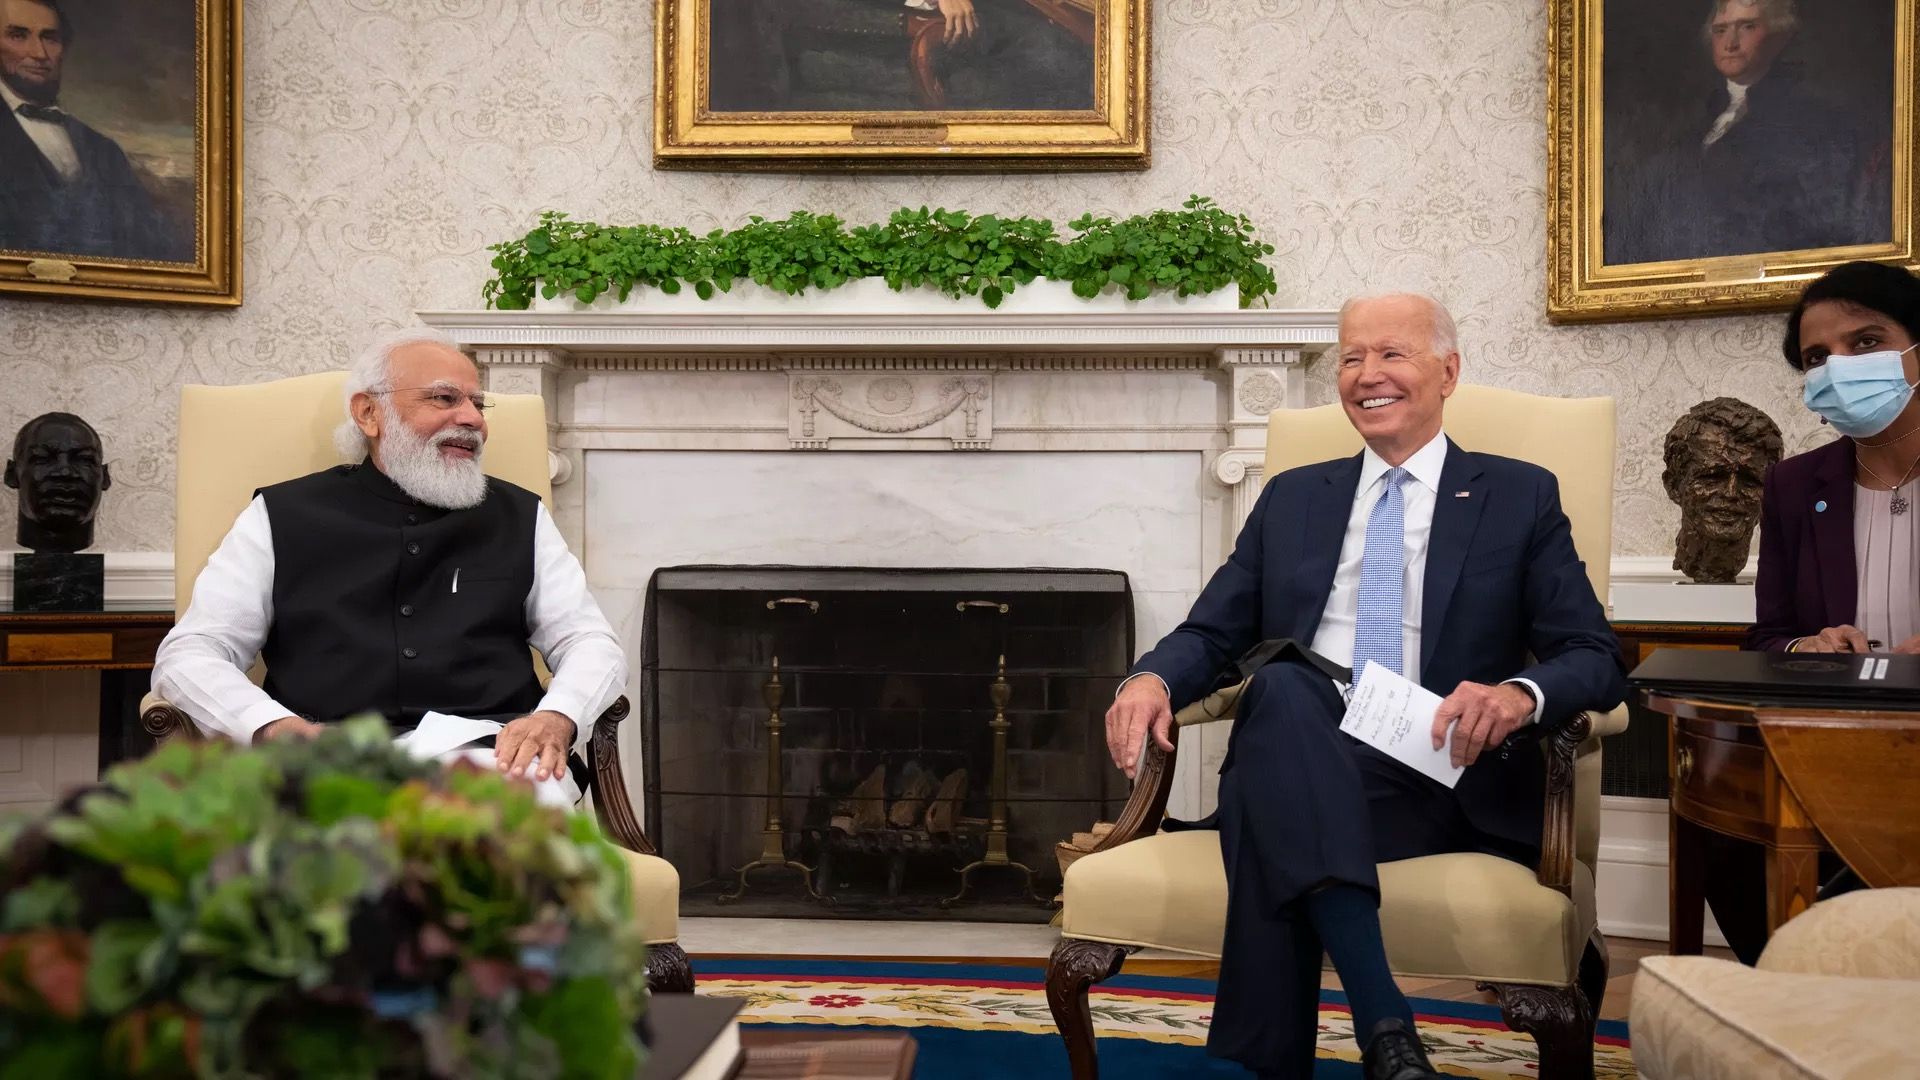 President Biden is seen hosting India Prime Minister Narendra Modi in the Oval Office.